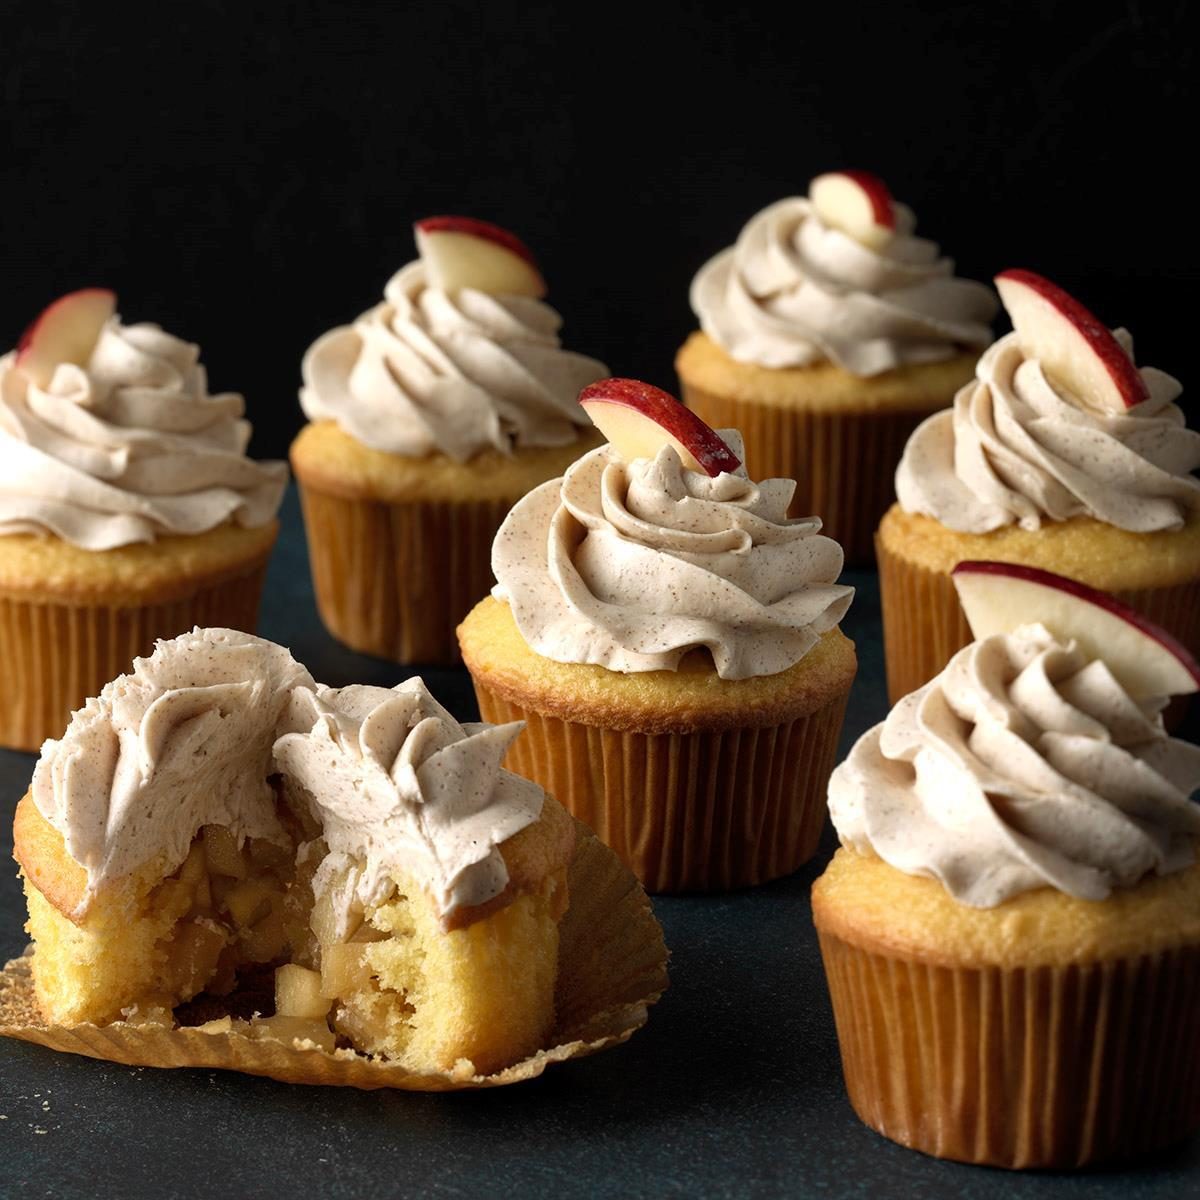 Apple Pie Cupcakes With Cinnamon Buttercream Exps Thn18 177885 C06 05 9b 22